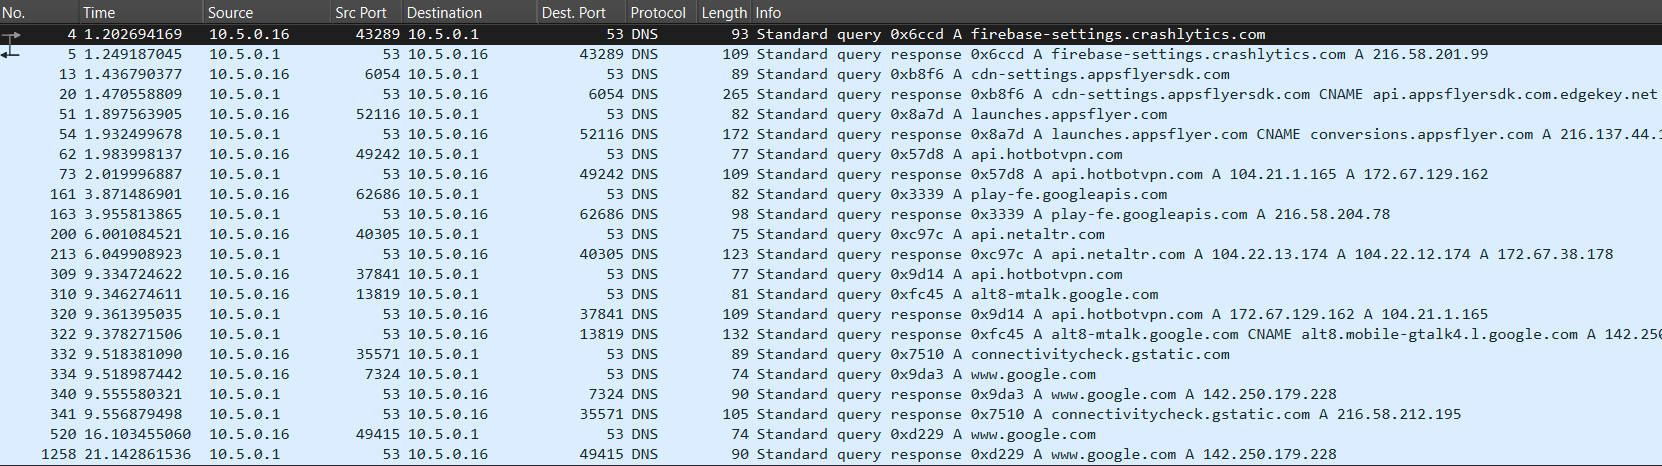 Screenshot of DNS leaks captured from HotBot VPN session